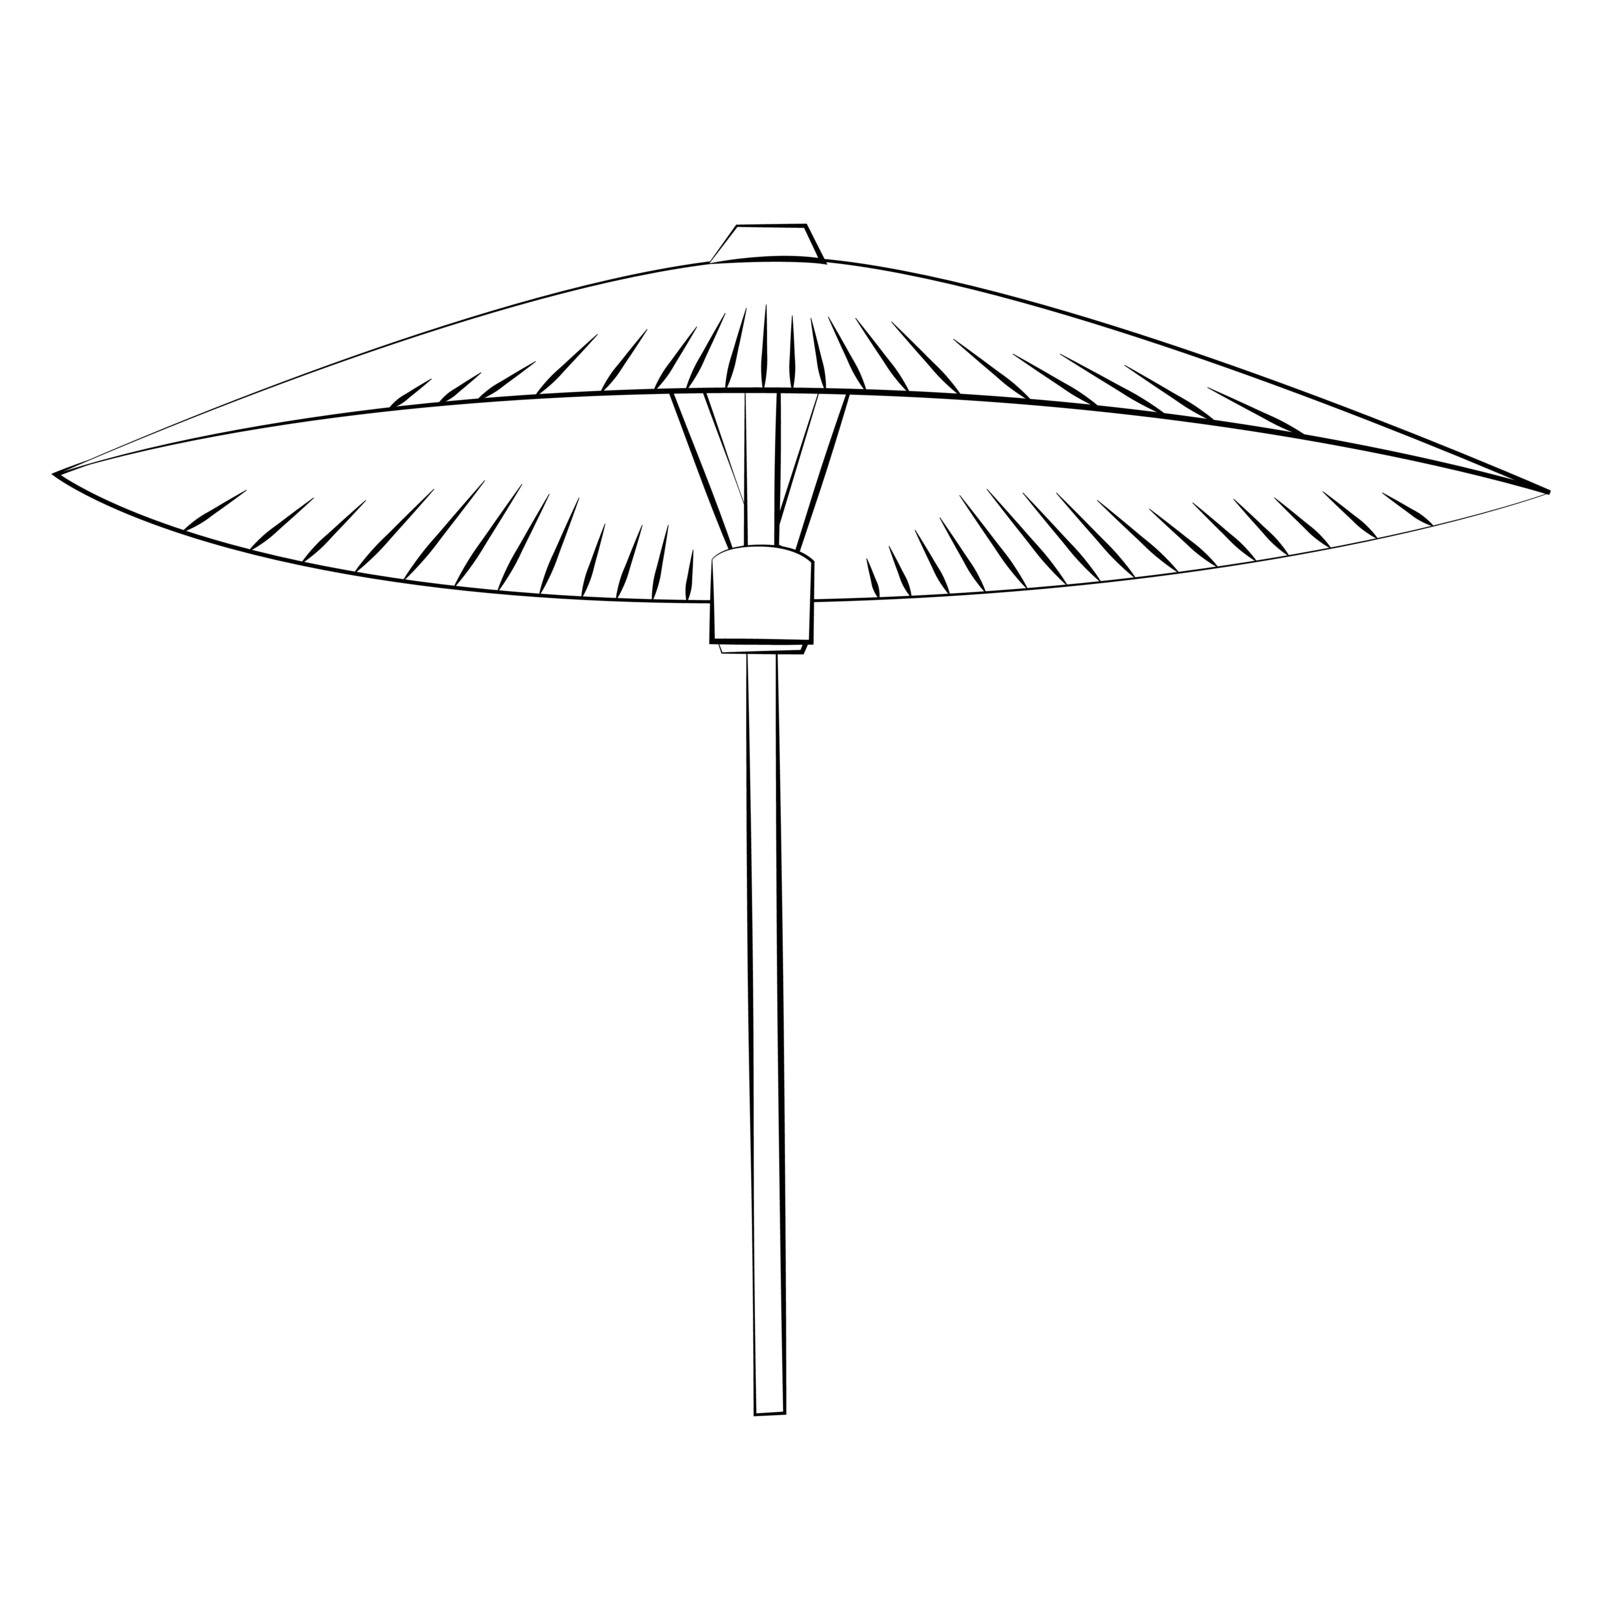 Umbrella by thanarat27